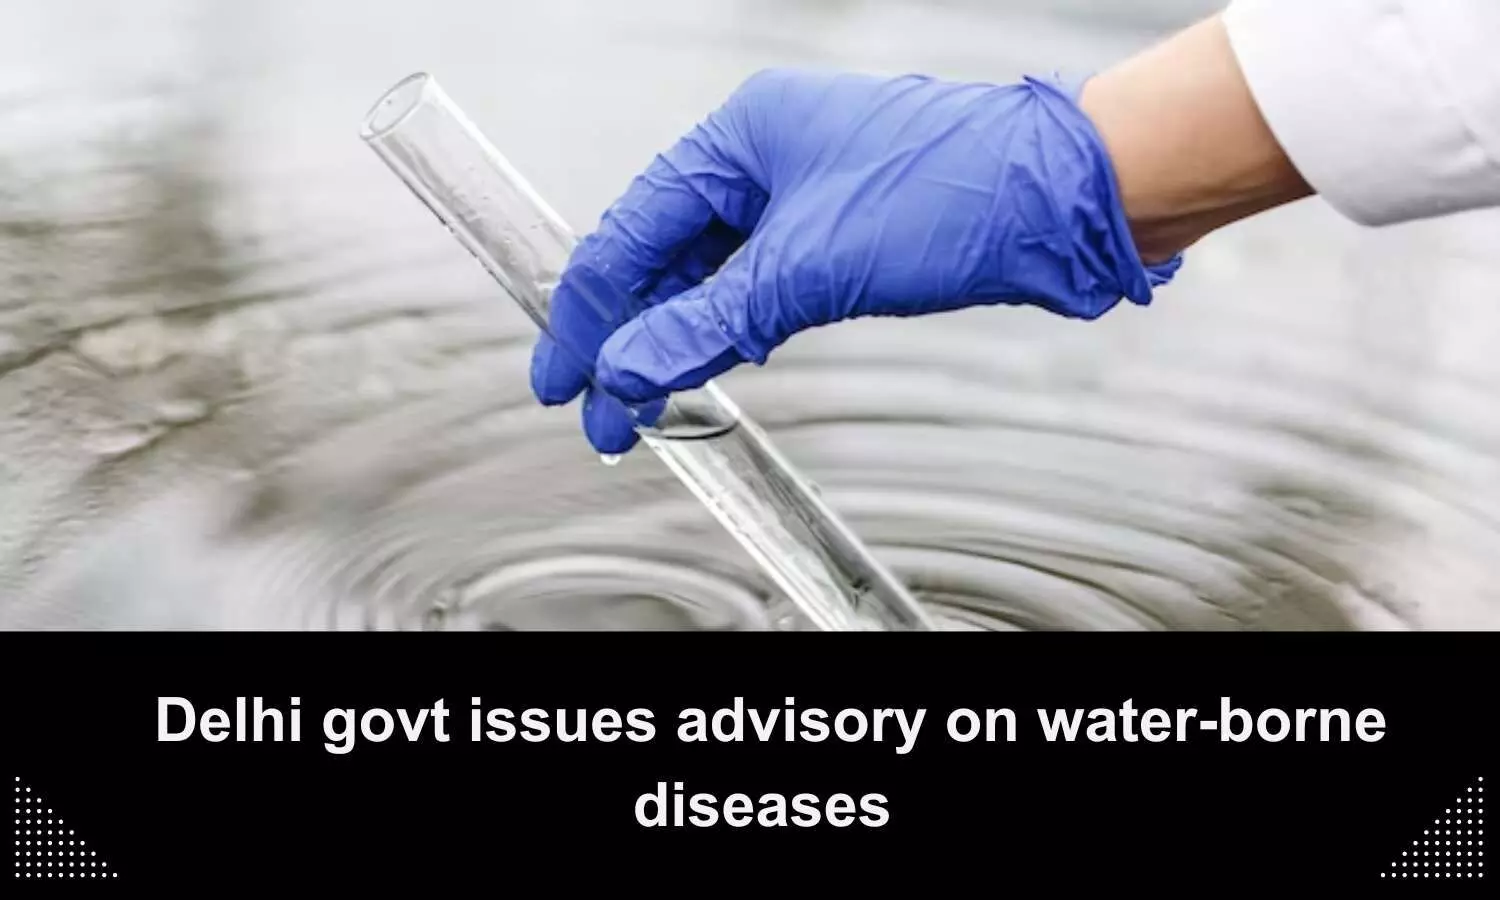 Advisory on water borne diseases issued by Delhi Govt